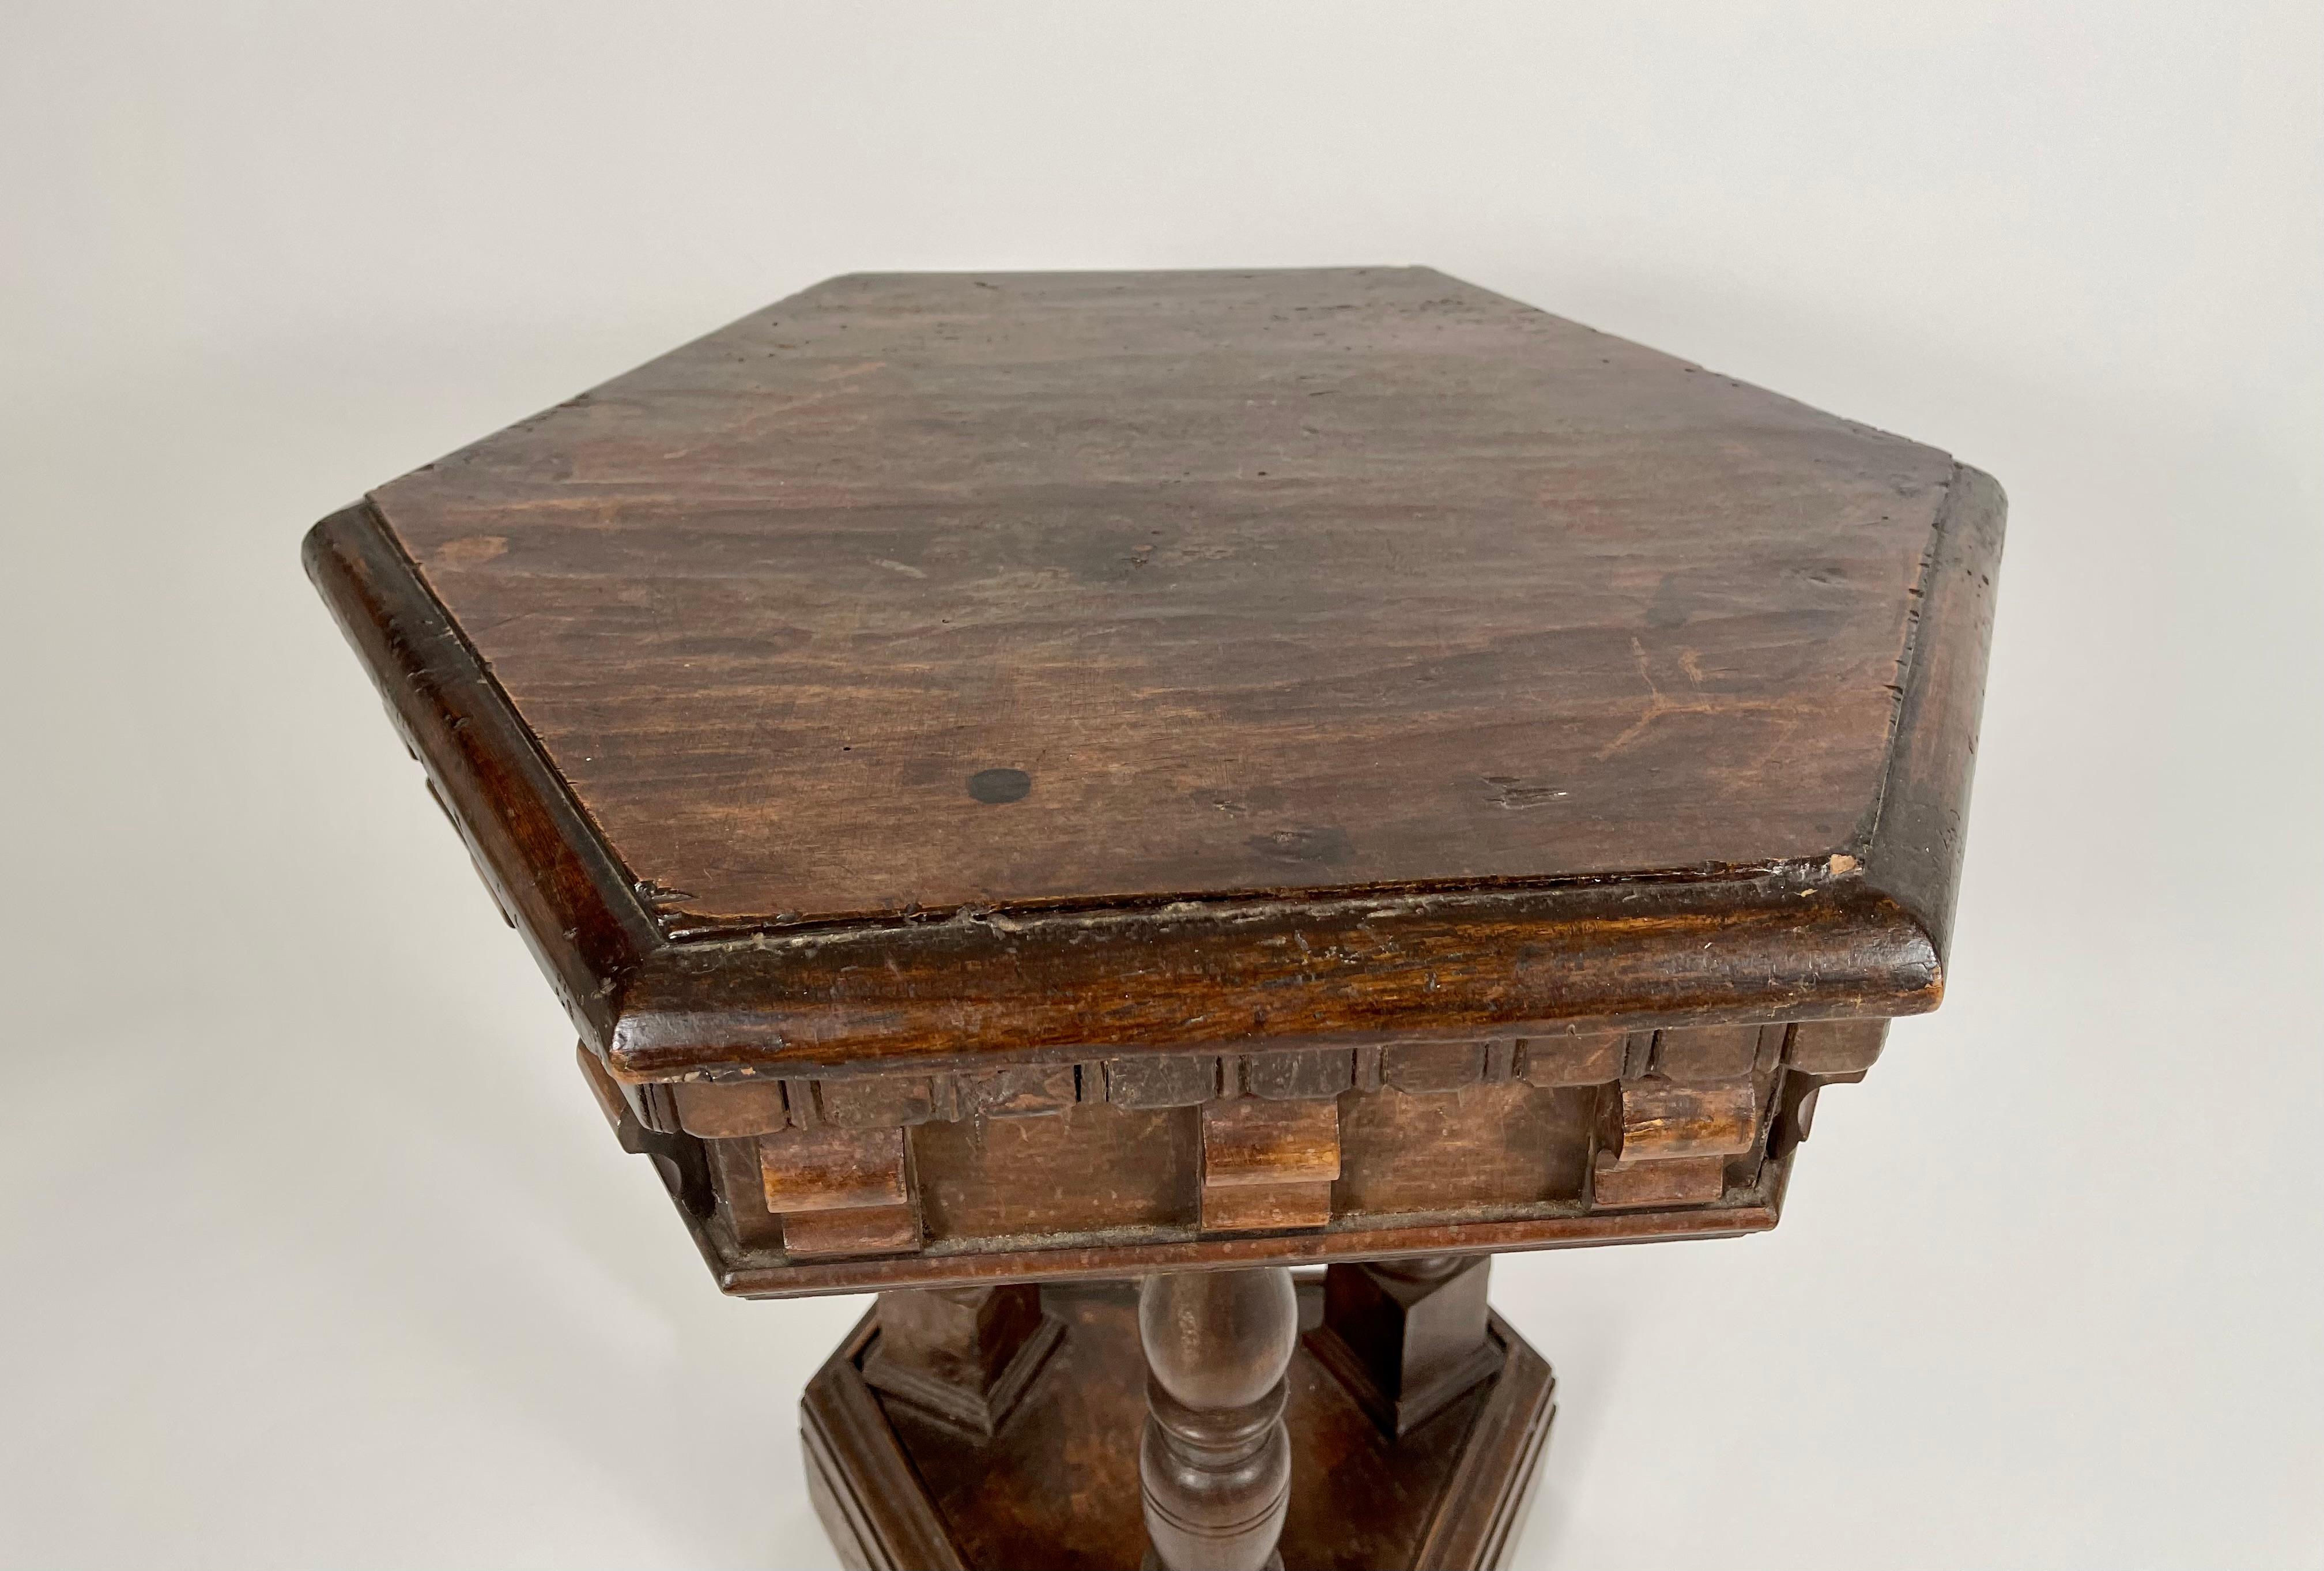 Turned Italian Renaissance Revival Walnut Side Table